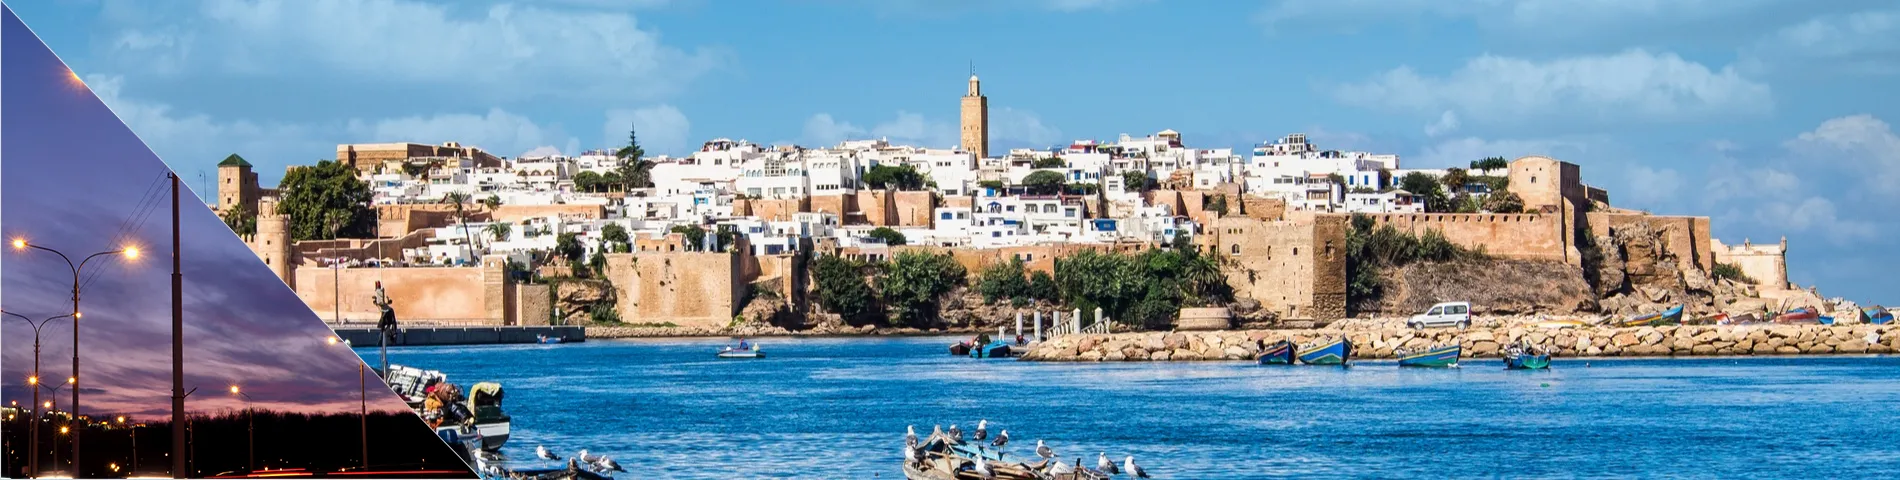 Rabat - 